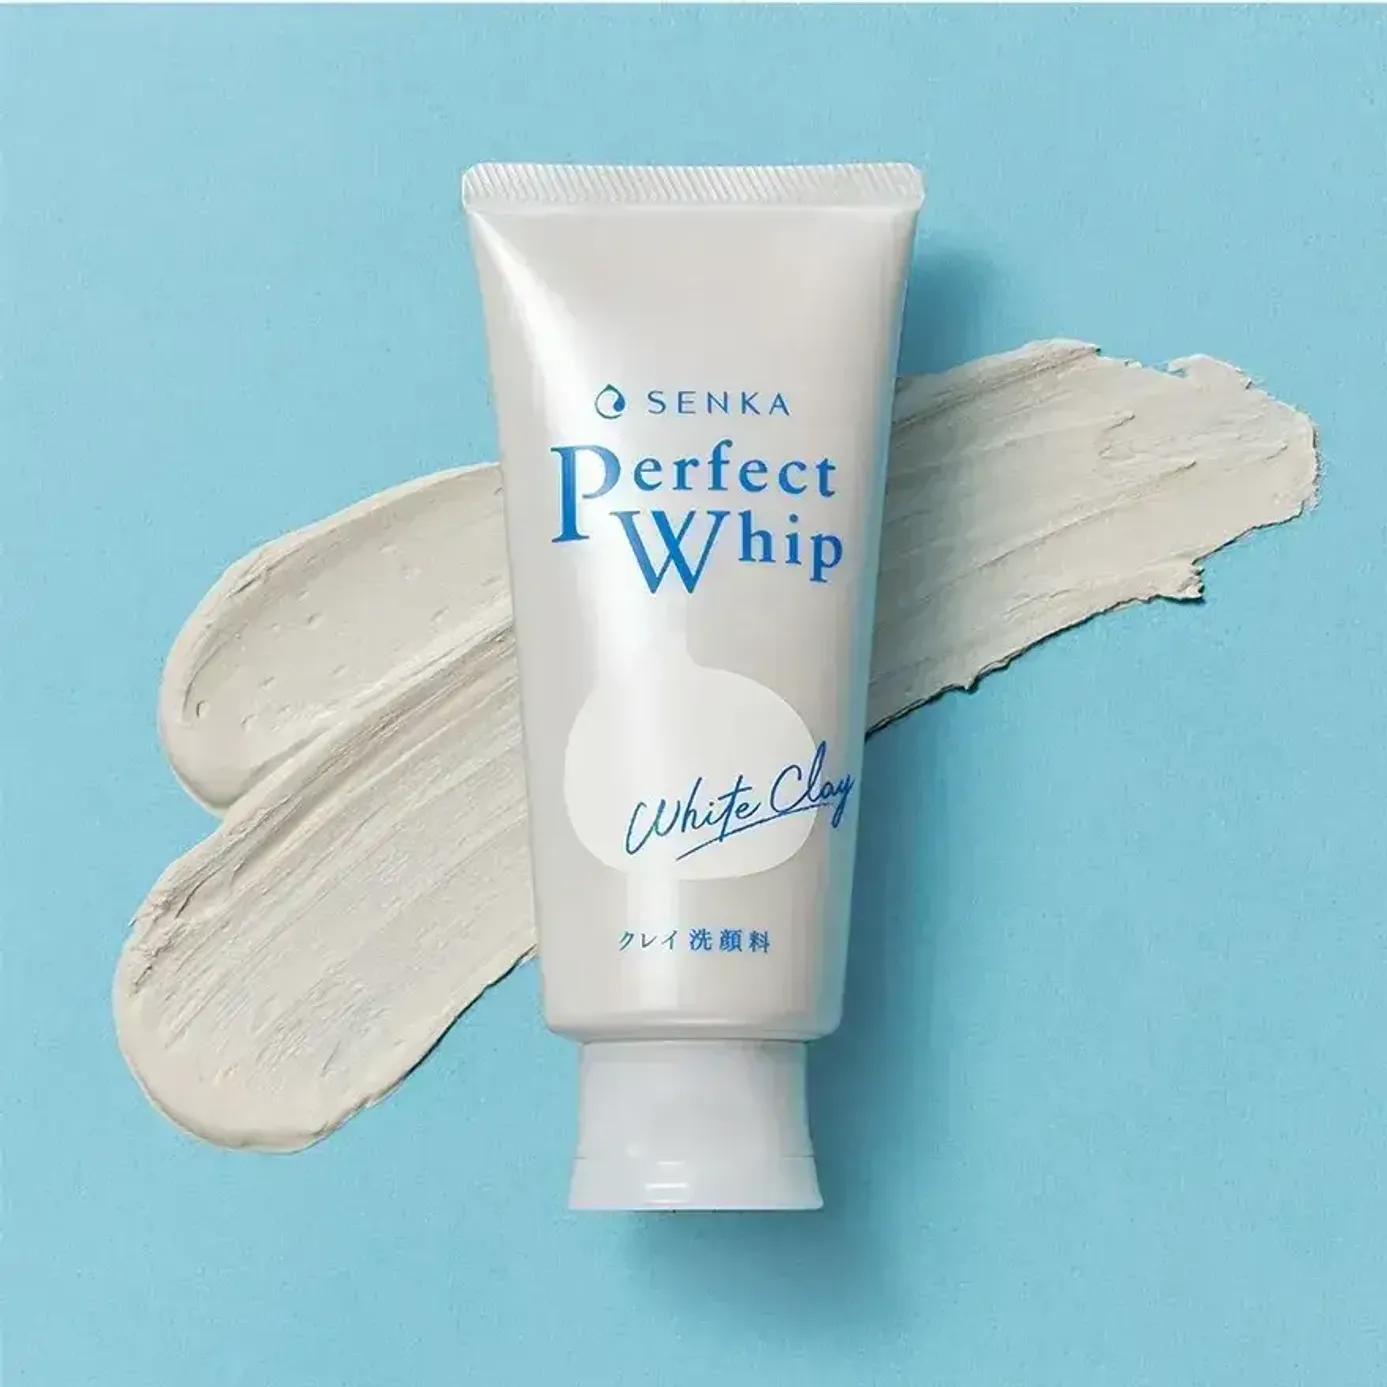 Sữa rửa mặt Shiseido Senka Perfect White Clay tuýp 120g